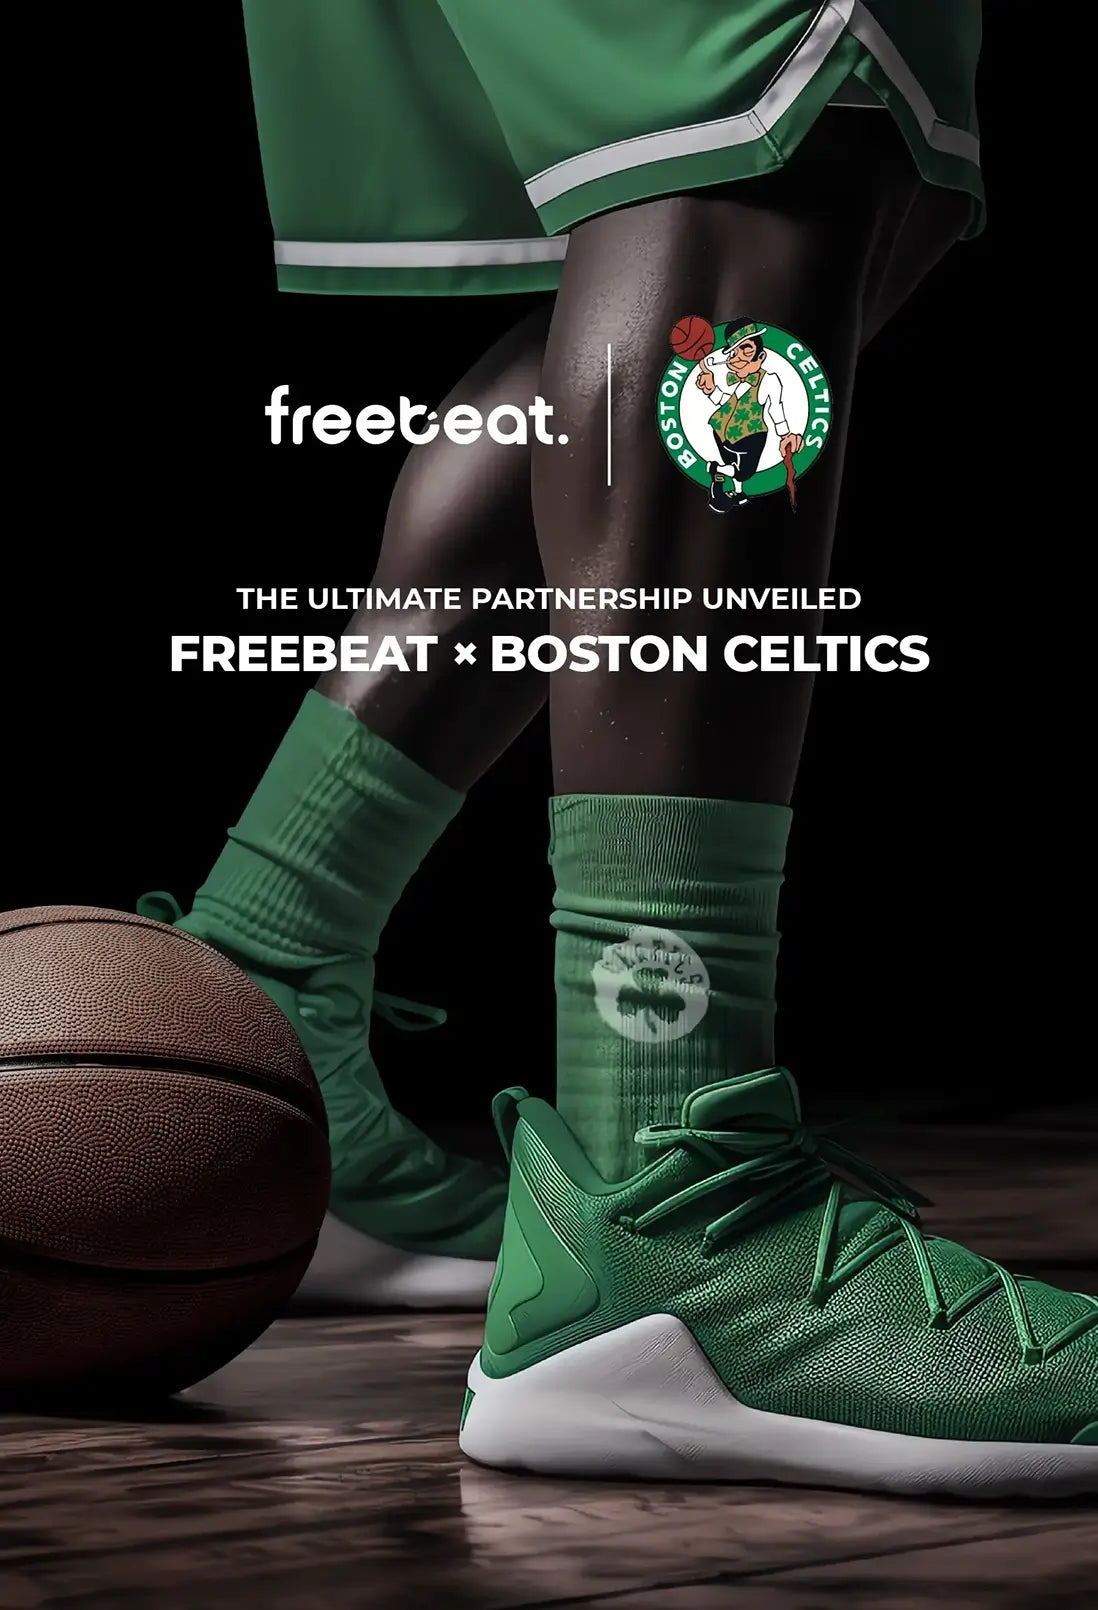 freebeat, Boston Celtics official partner | NBA News